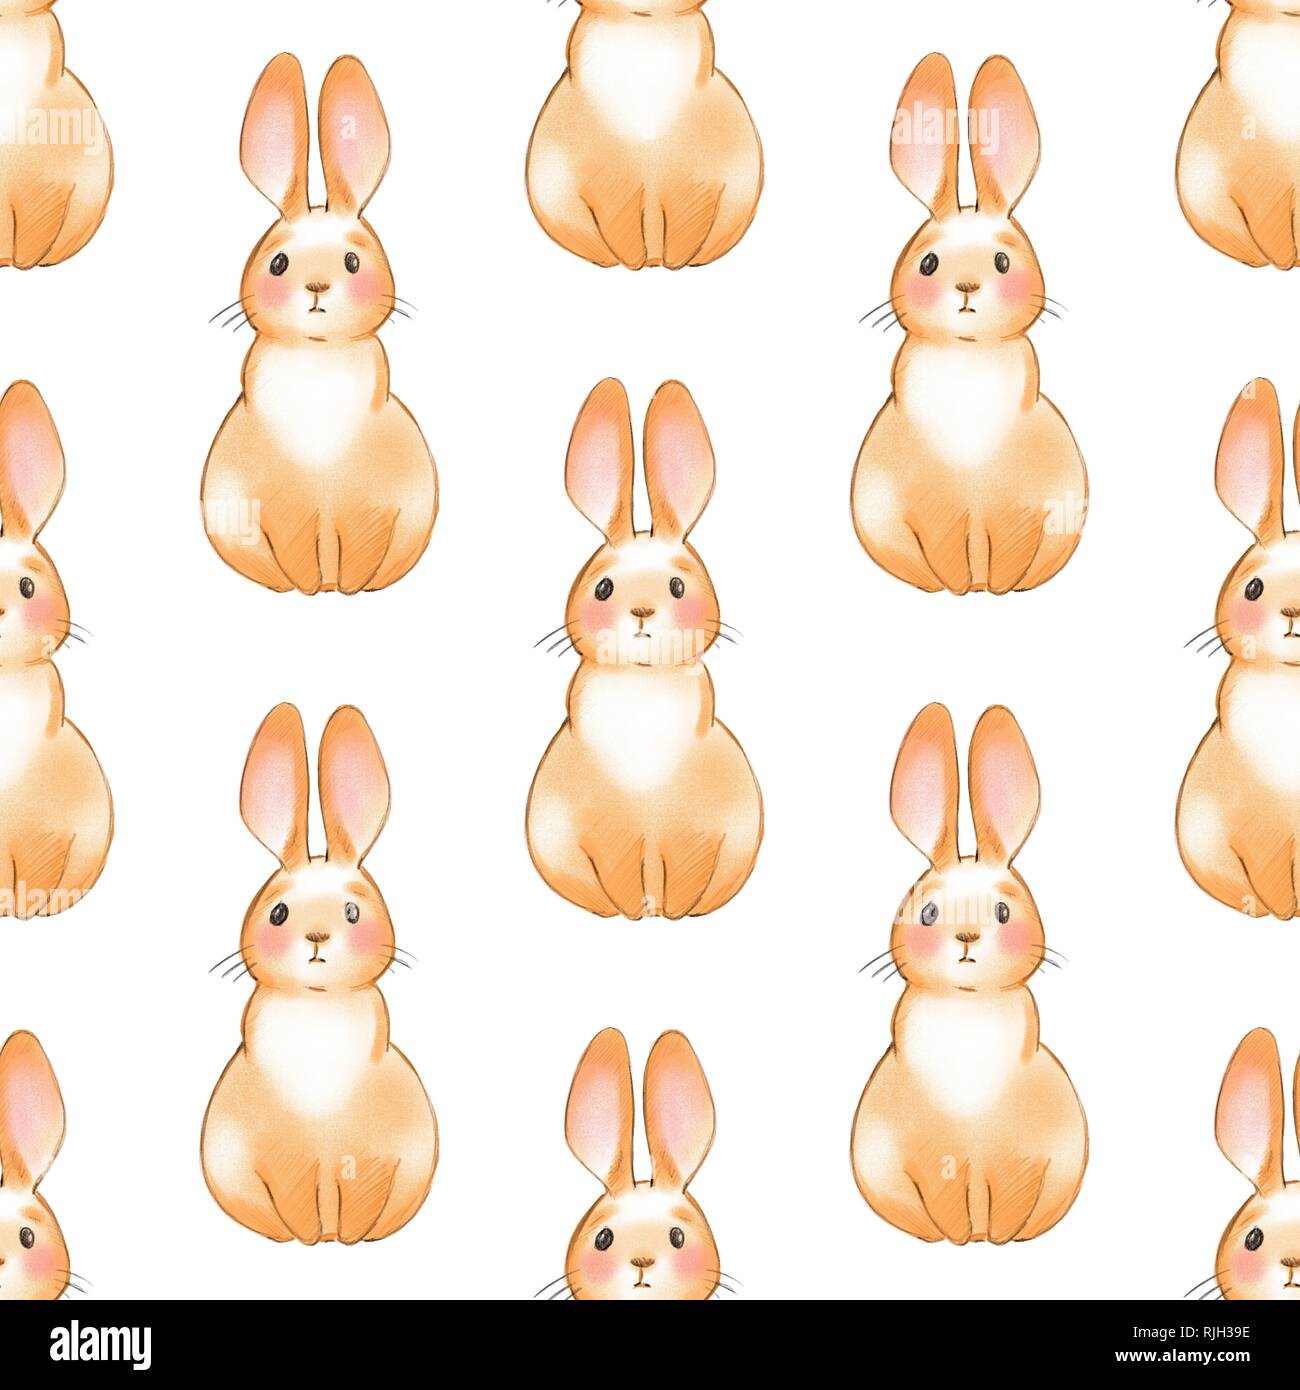 Cute cartoon rabbits. Seamless pattern Stock Photo